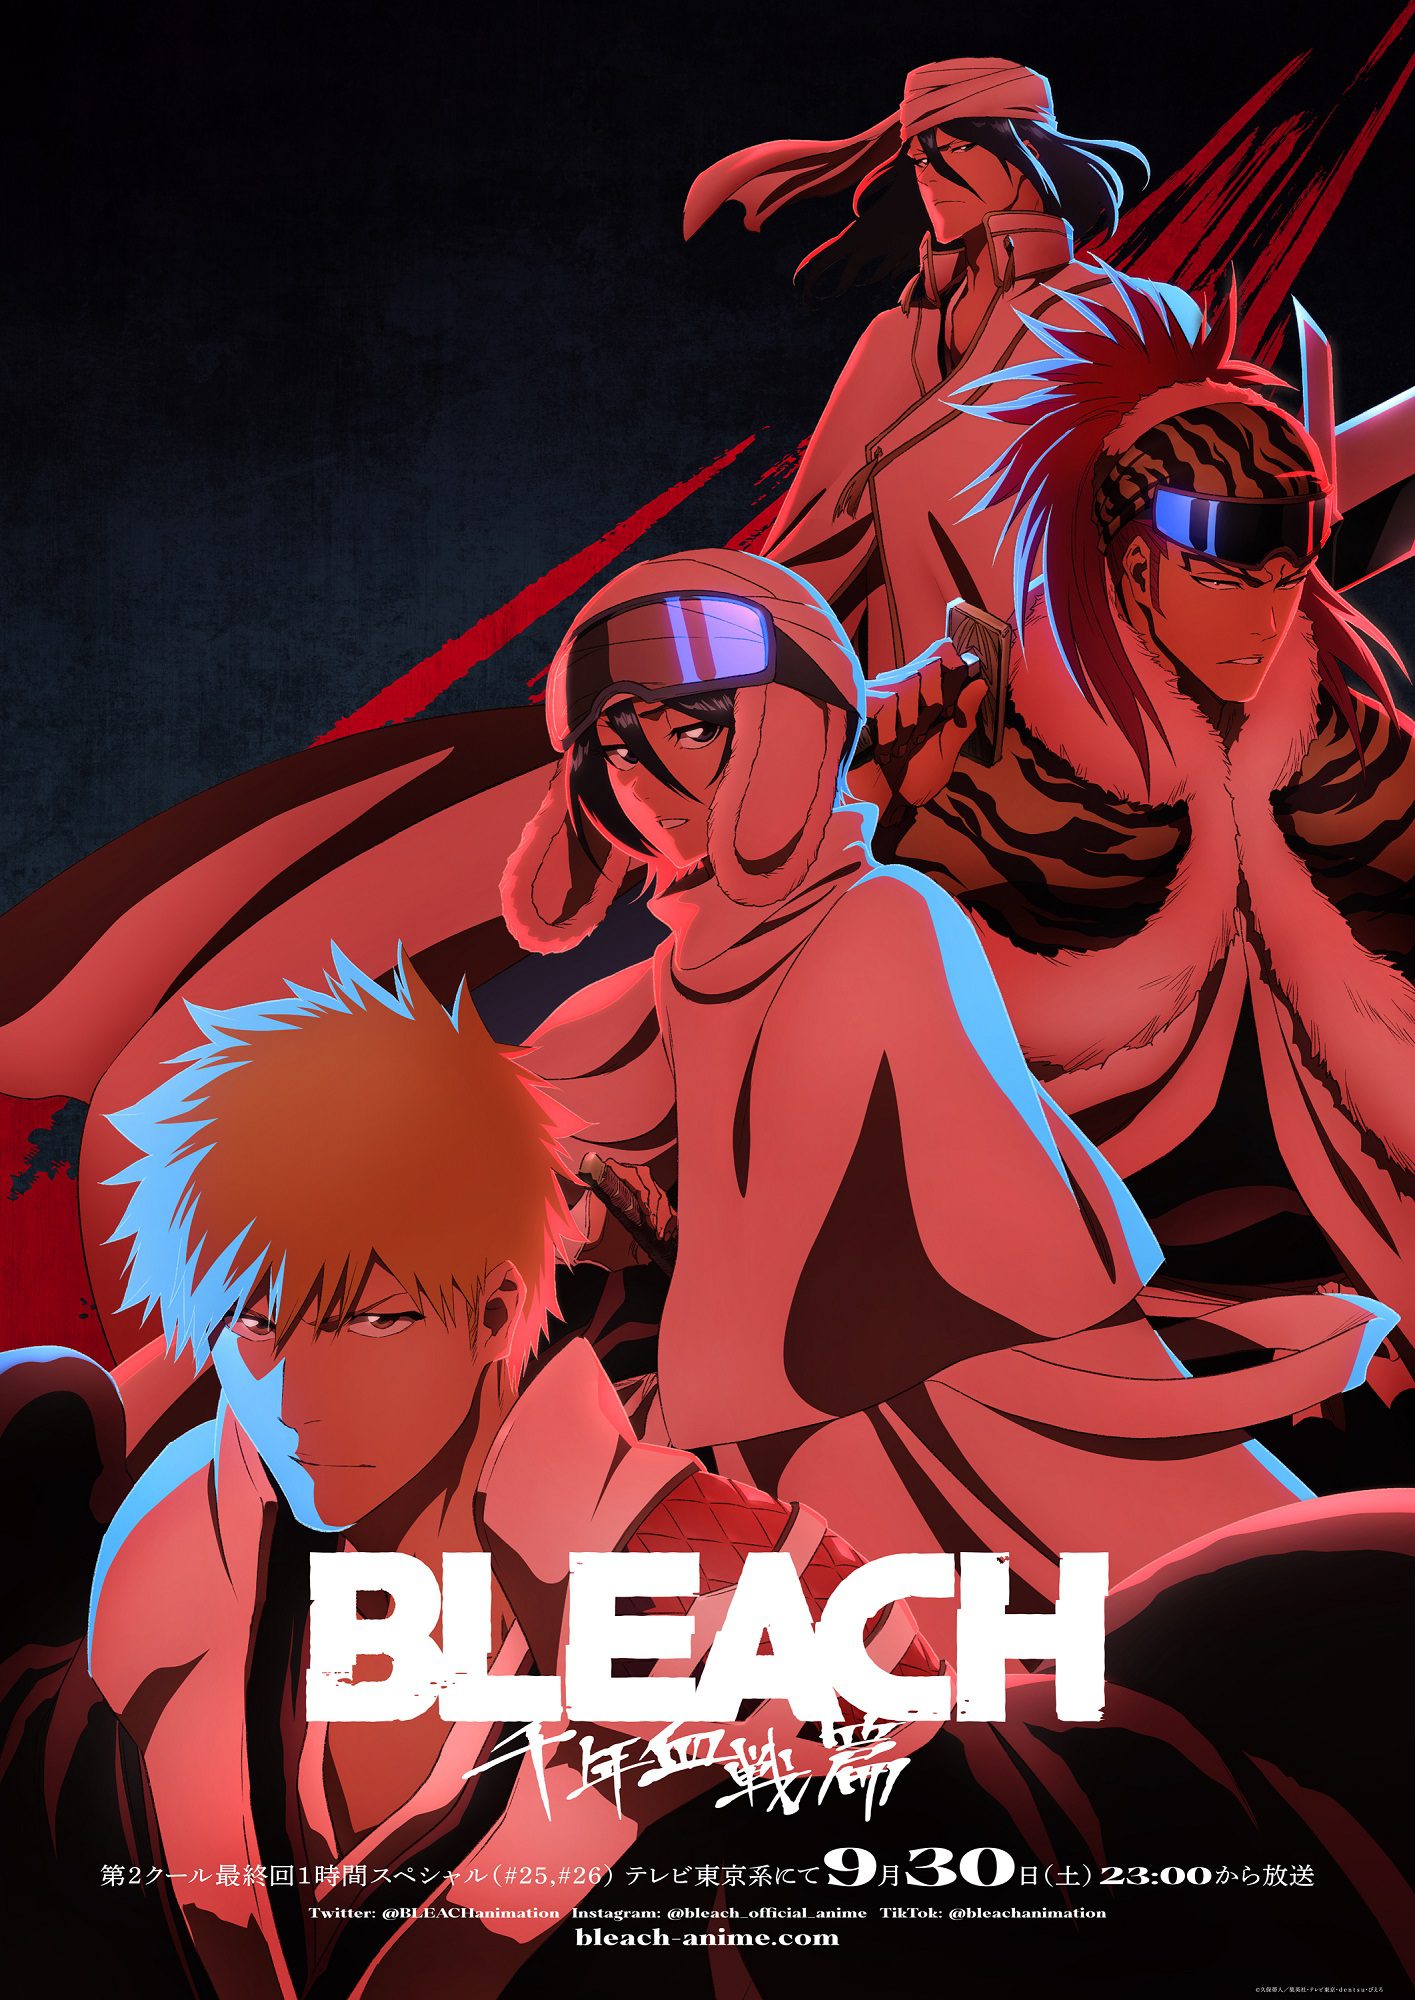 Bleach: Thousand-Year Blood War recebe novo trailer e data de